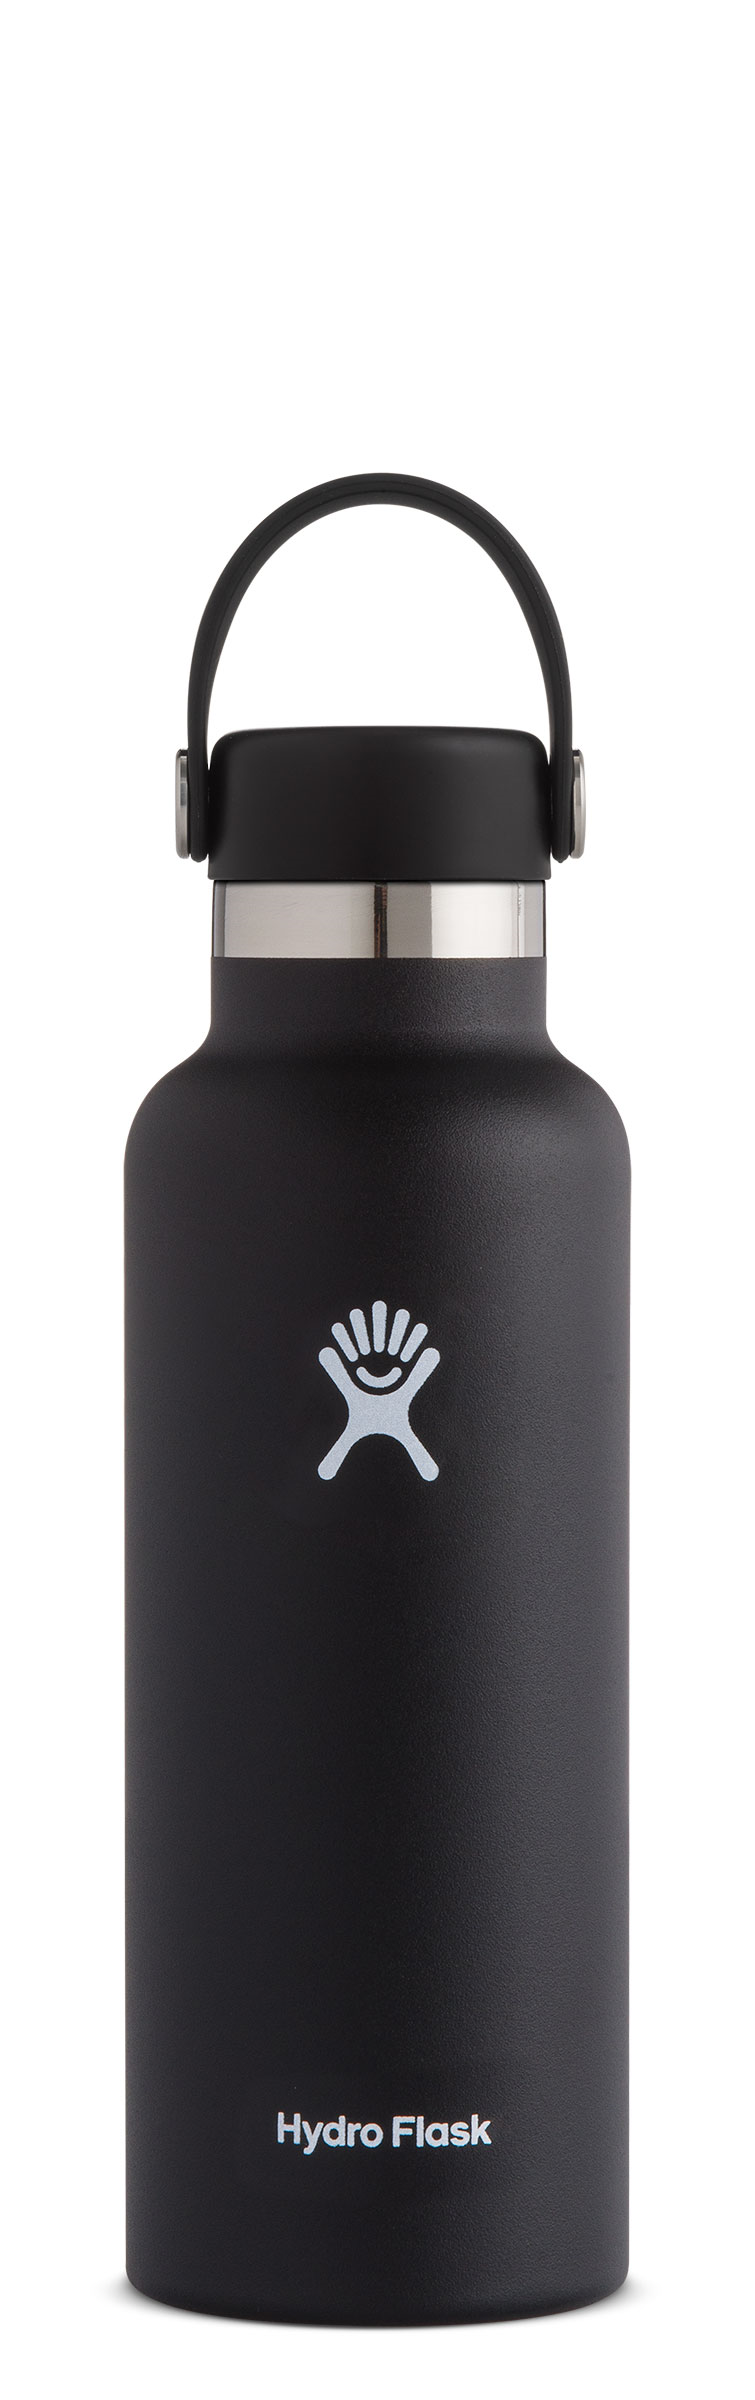 Hydro Flask 18 oz. Standard Mouth Bottle